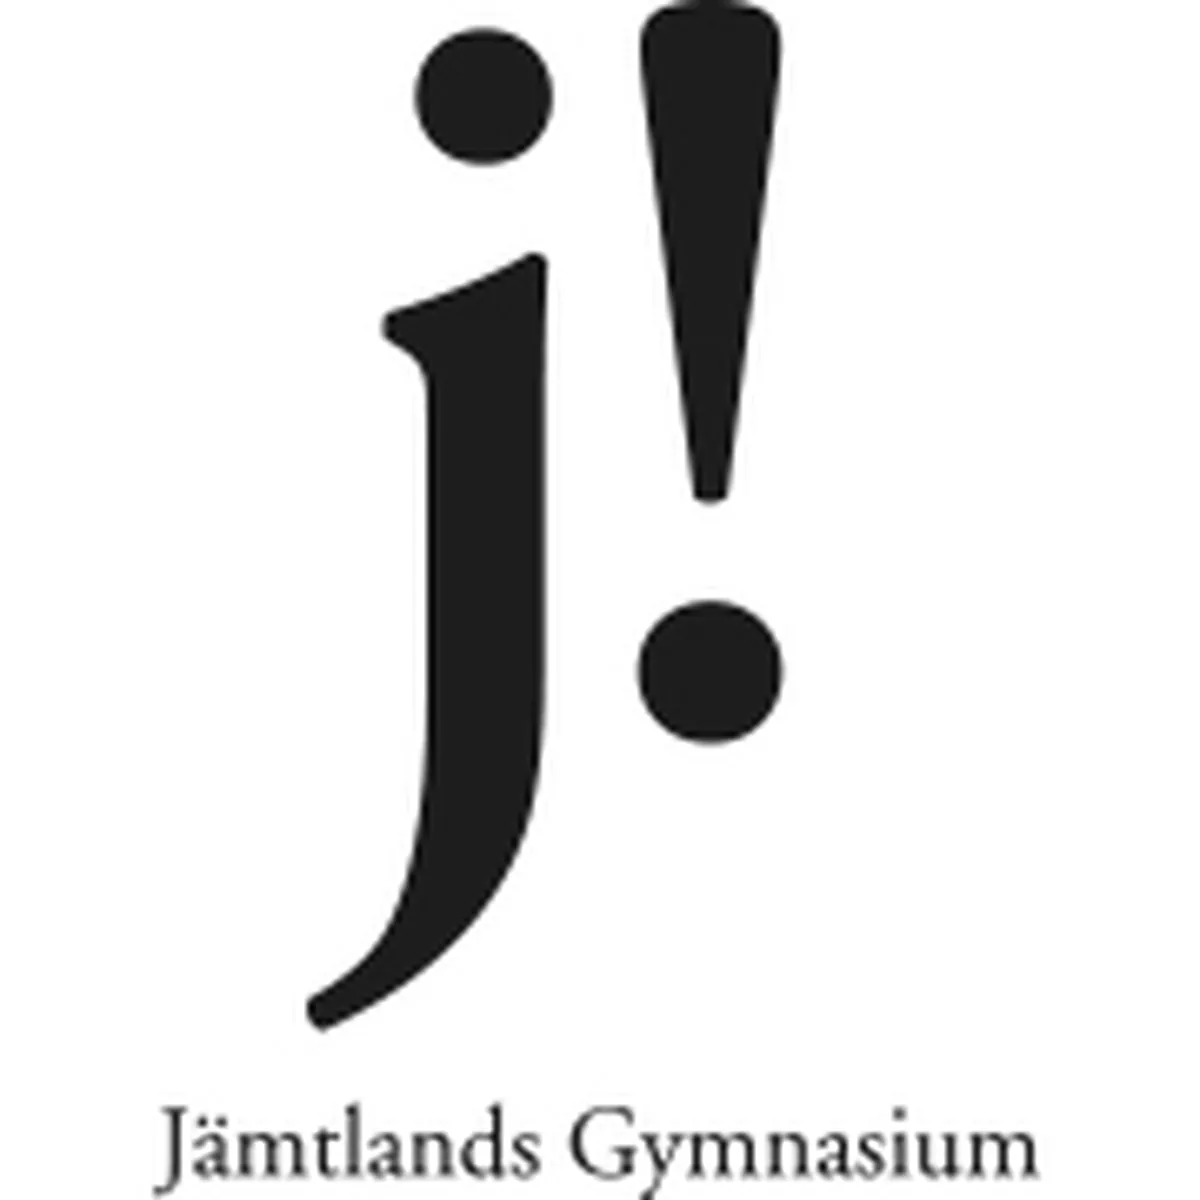 Jämtlands Gymnasium Bispgården 